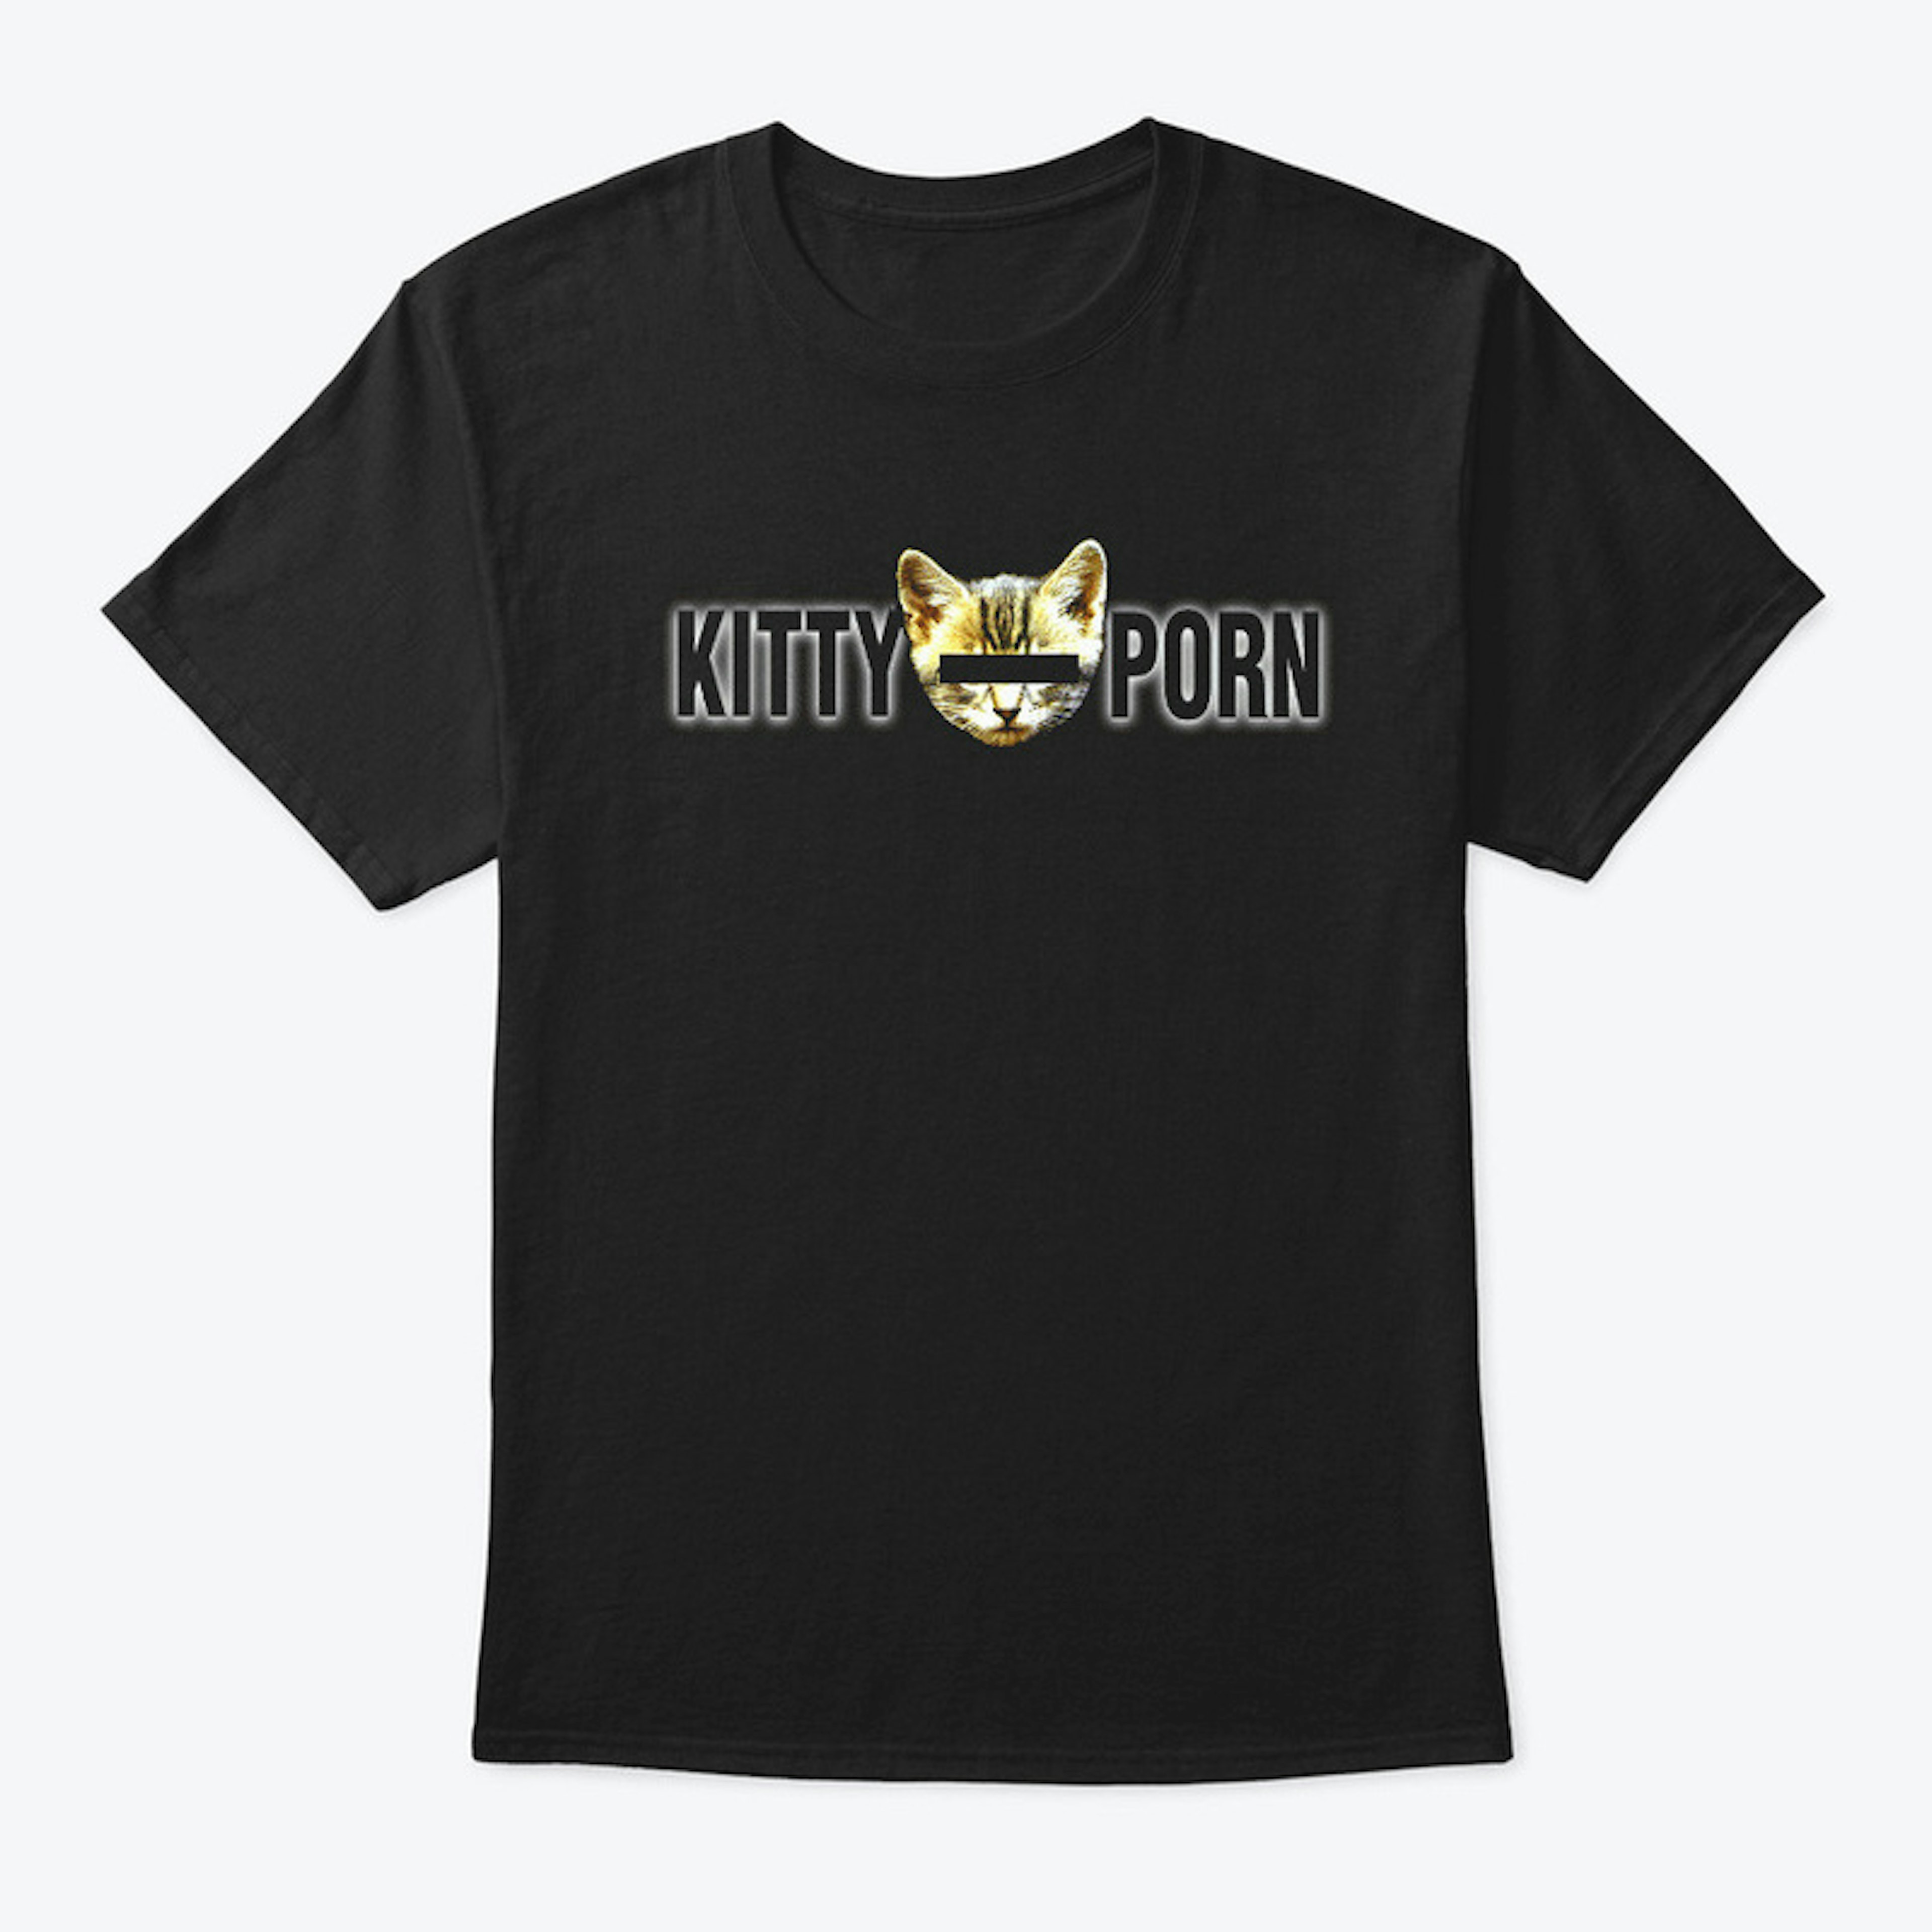 Men's T-Shirts (Kitty Porn)